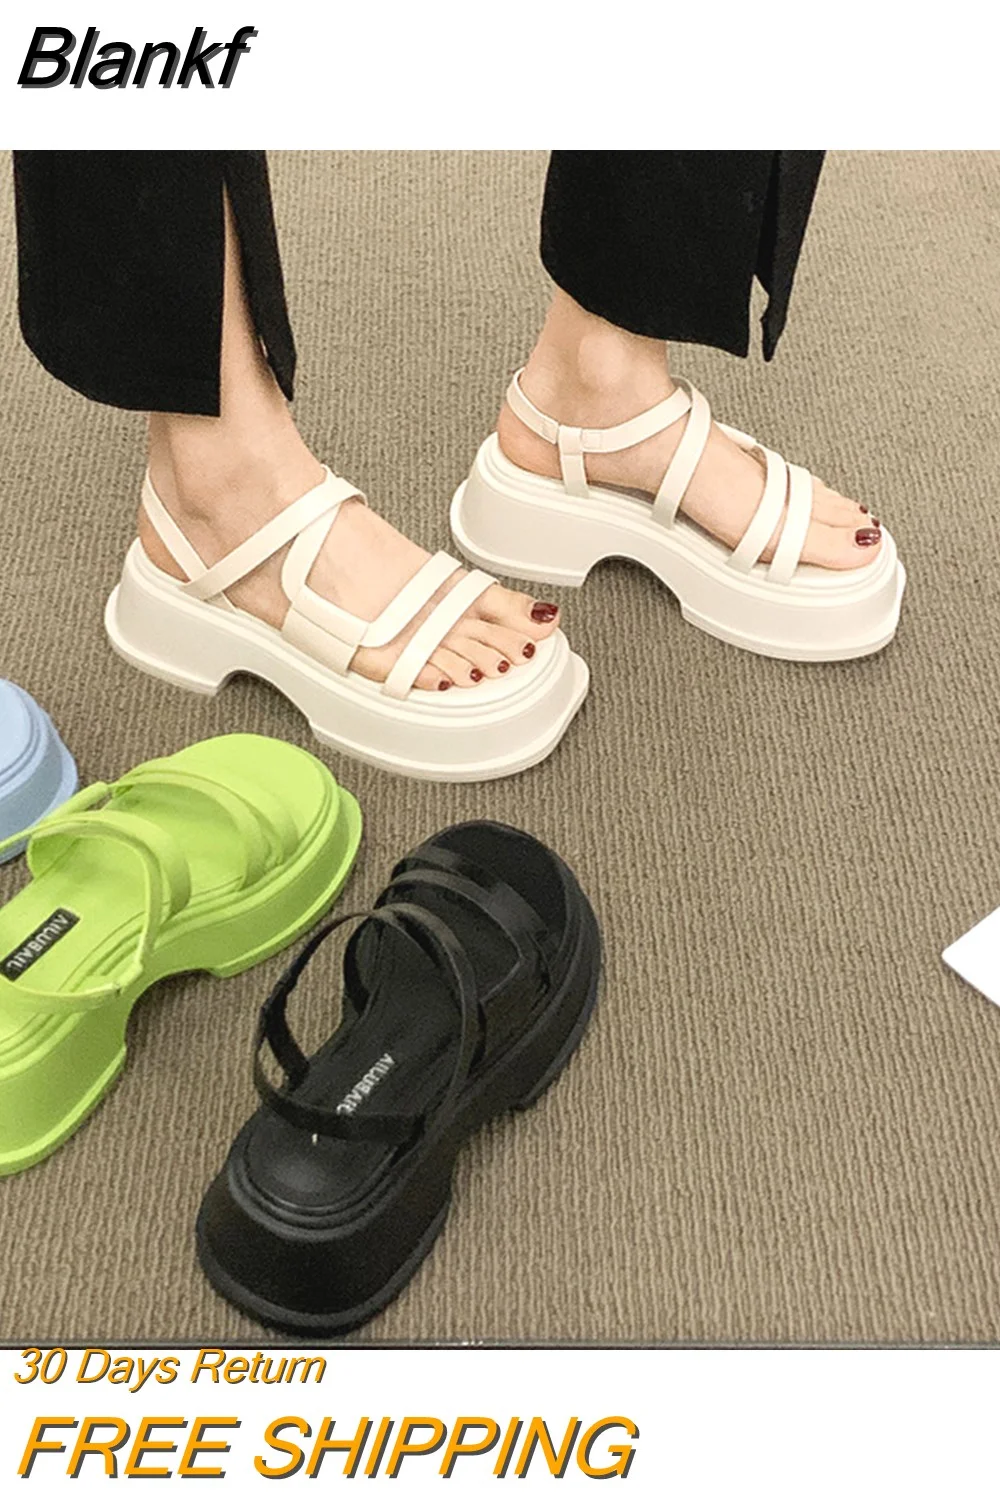 Blankf Sandals All-Match Platform Ladies Shoes Summer Ankle Strap Women's Heels Female Gladiator Wedge Comfort Beach Rome Sandals